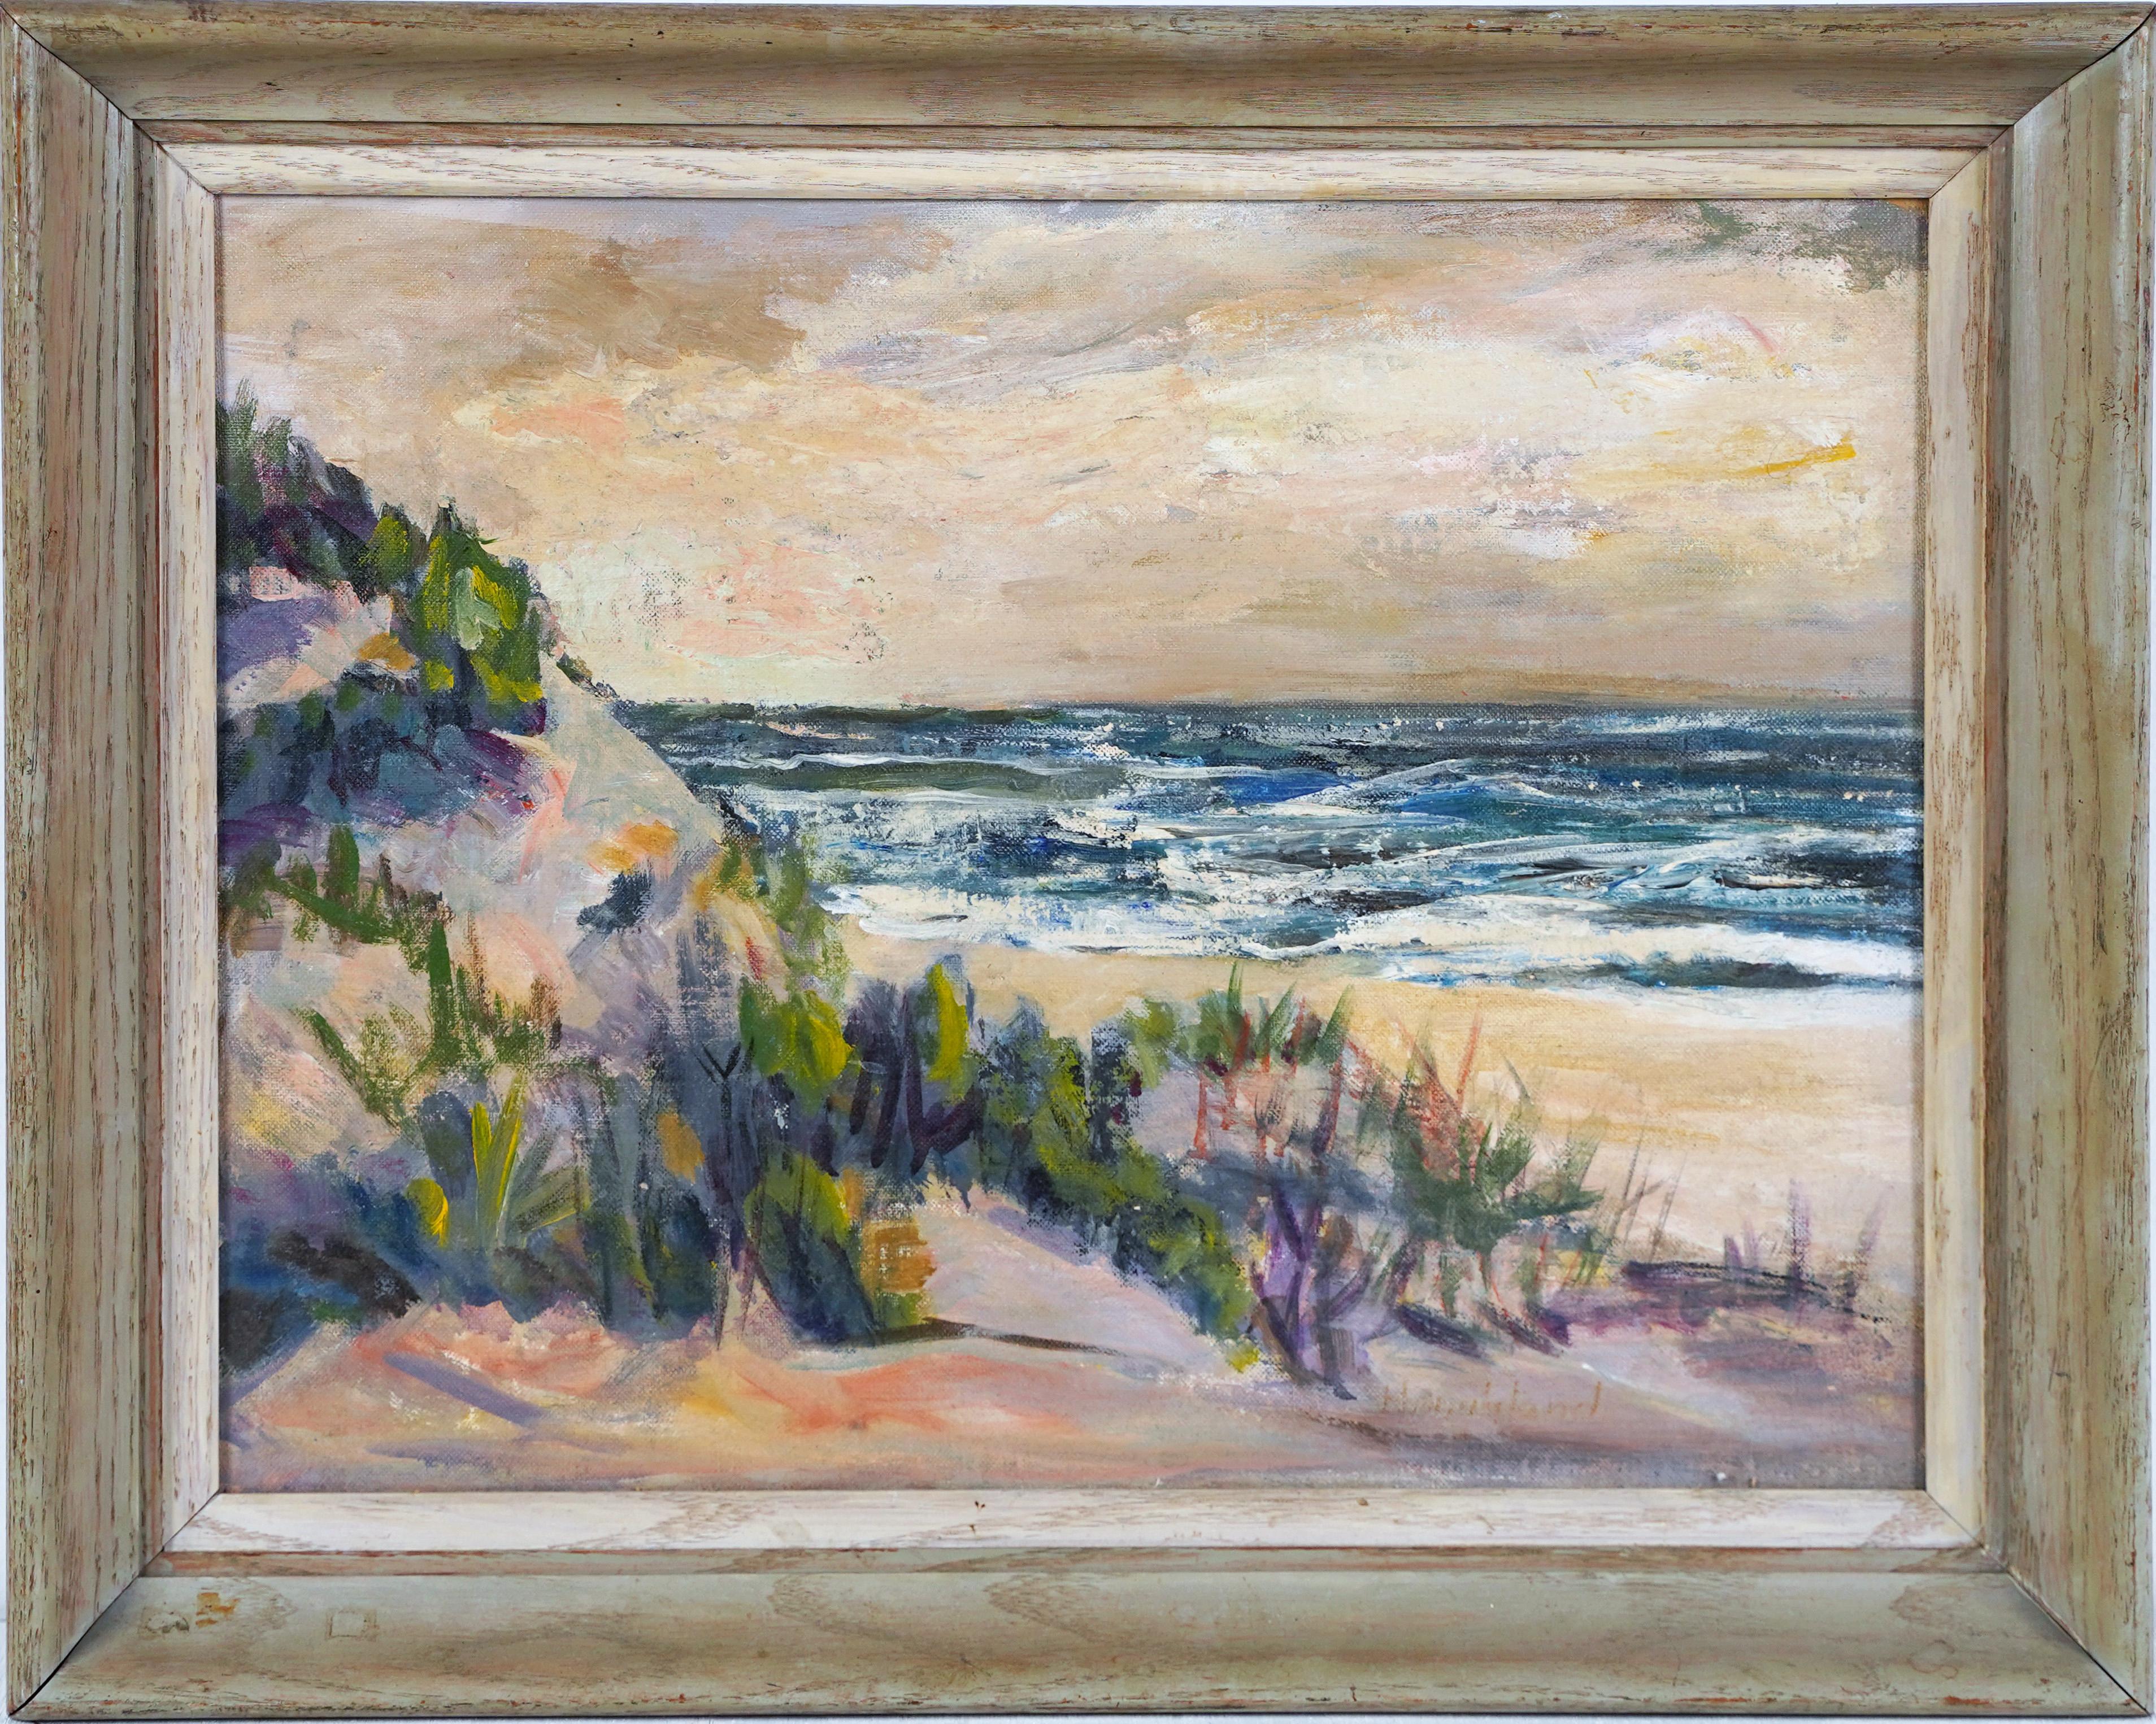 Antique American Impressionist Florida Coastal Sandy Beach Scene Oil Painting